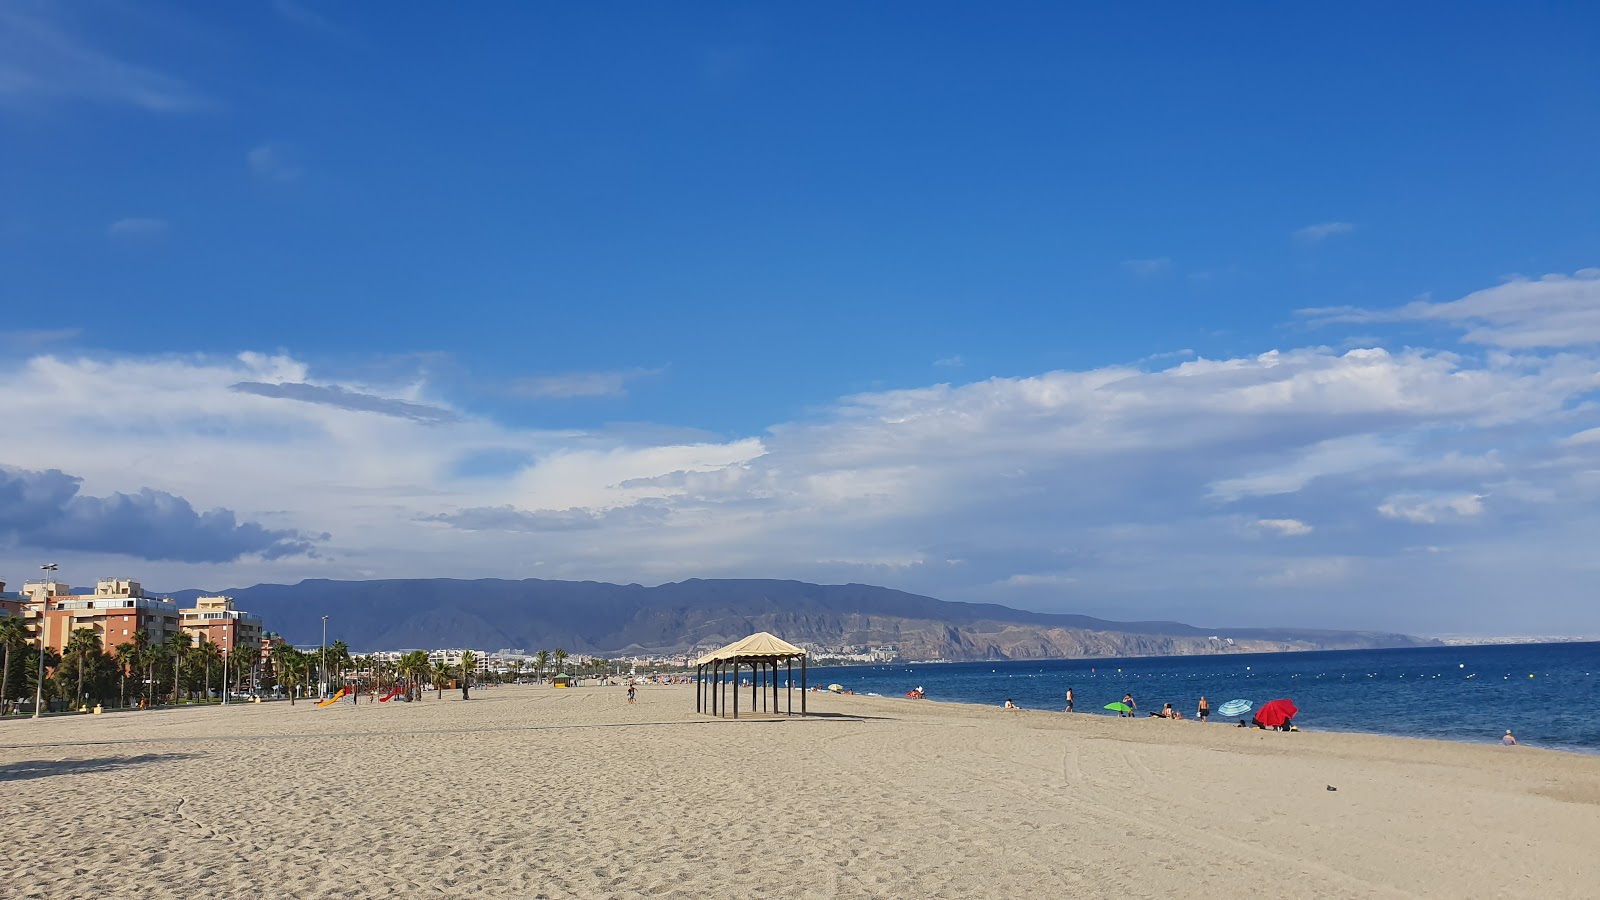 Photo of Playa de la Romanilla with gray shell sand surface